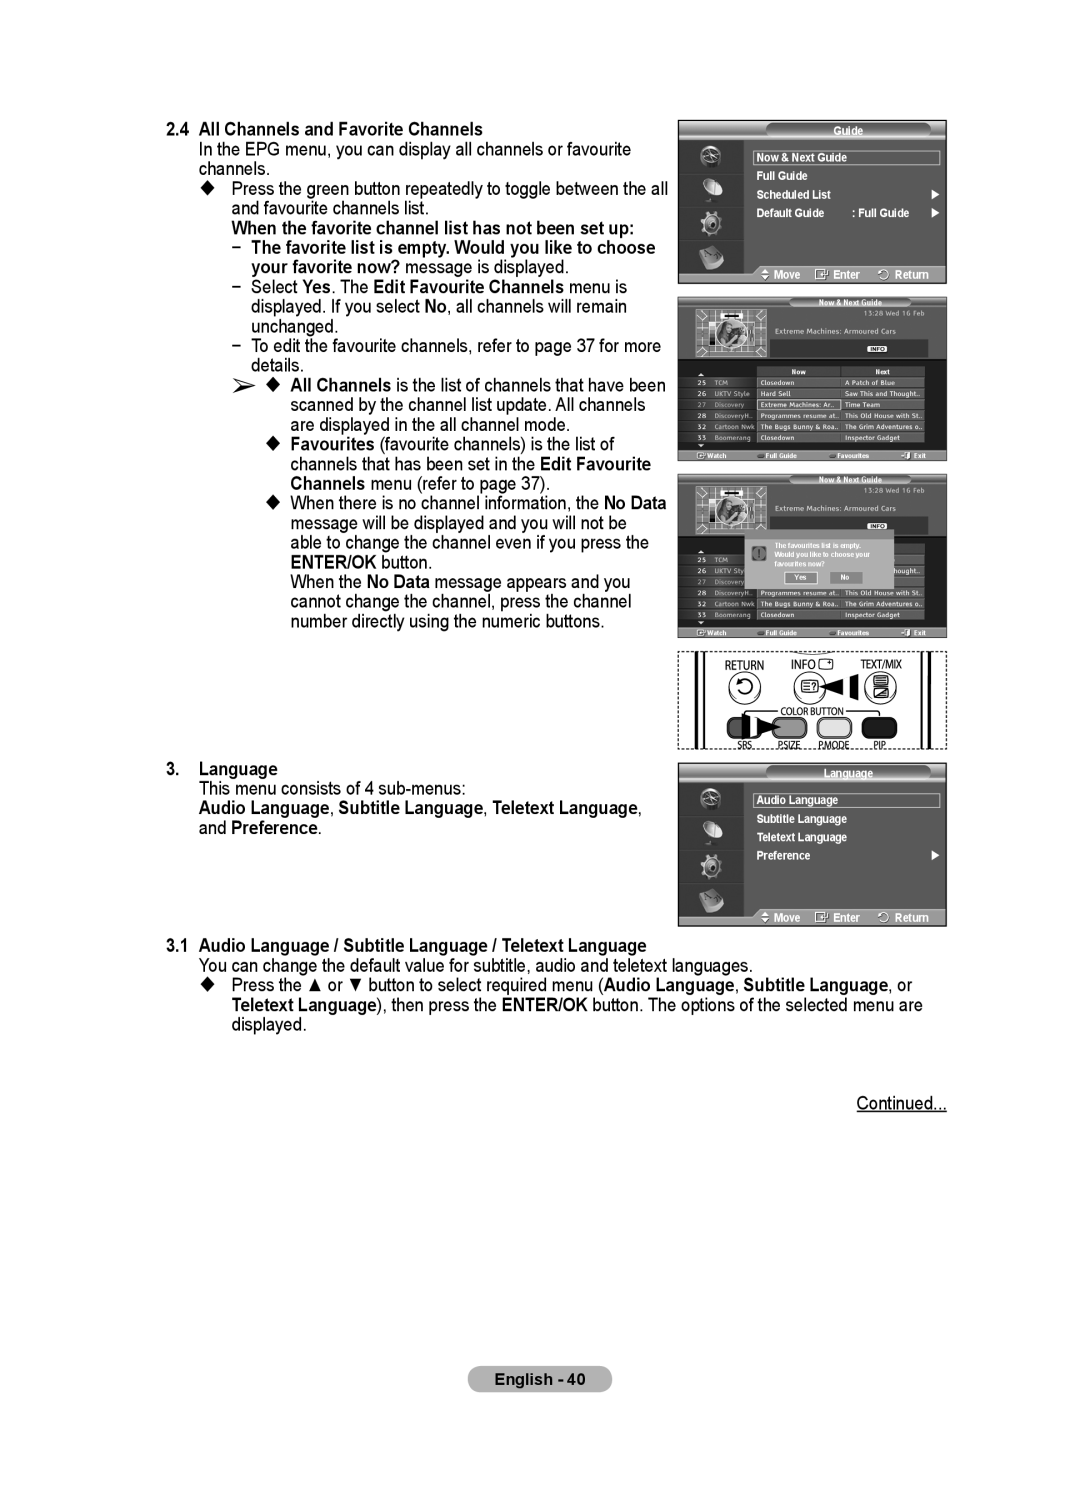 Samsung PS-42C77HD manual All Channels and Favorite Channels, Audio Language / Subtitle Language / Teletext Language 